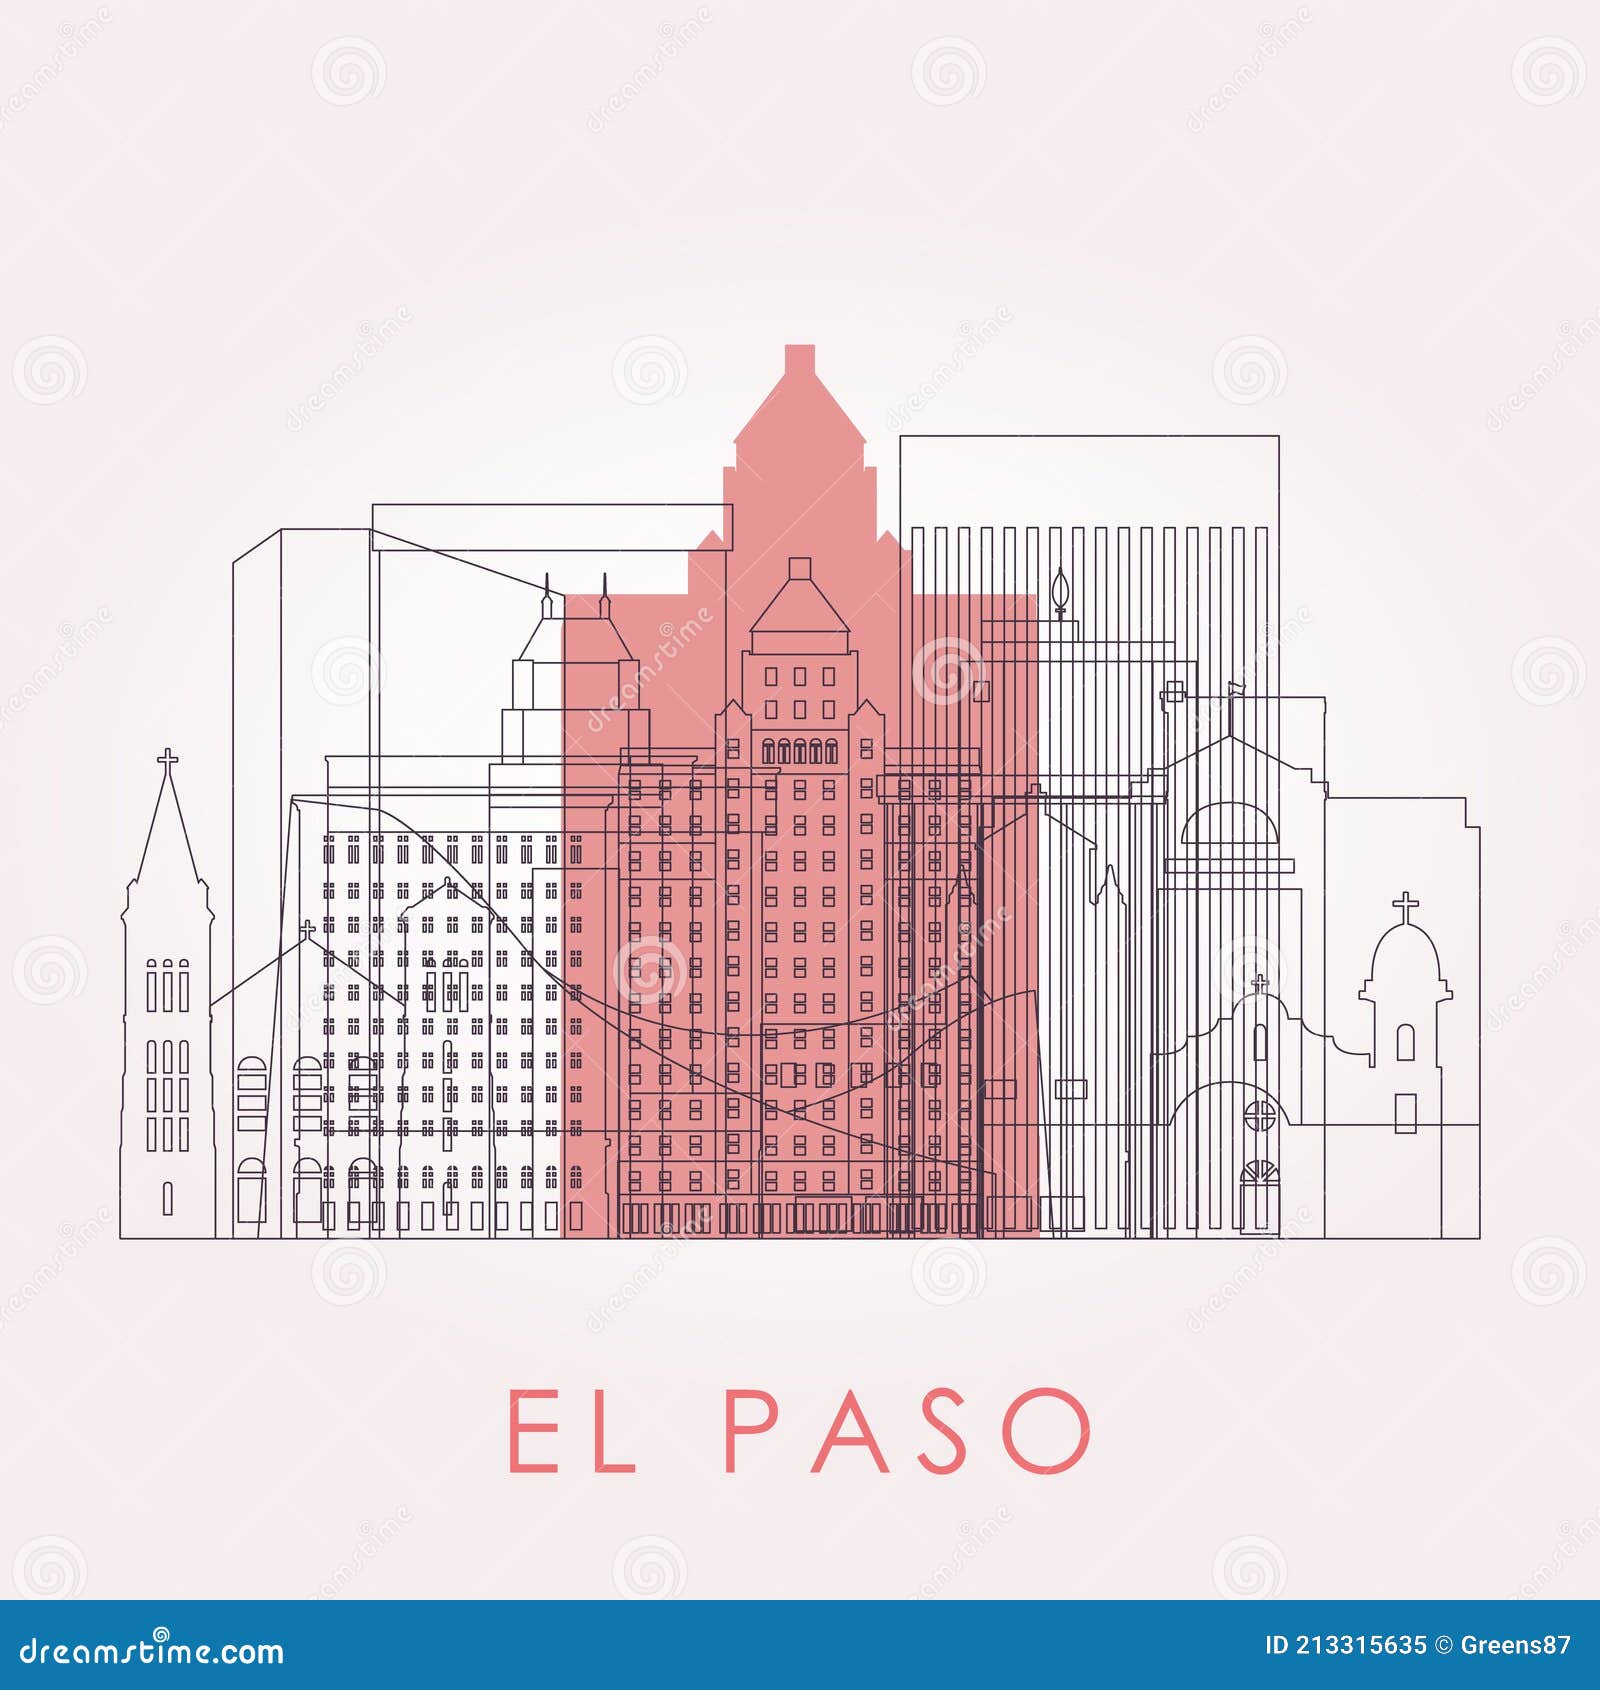 outline el paso skyline with landmarks.